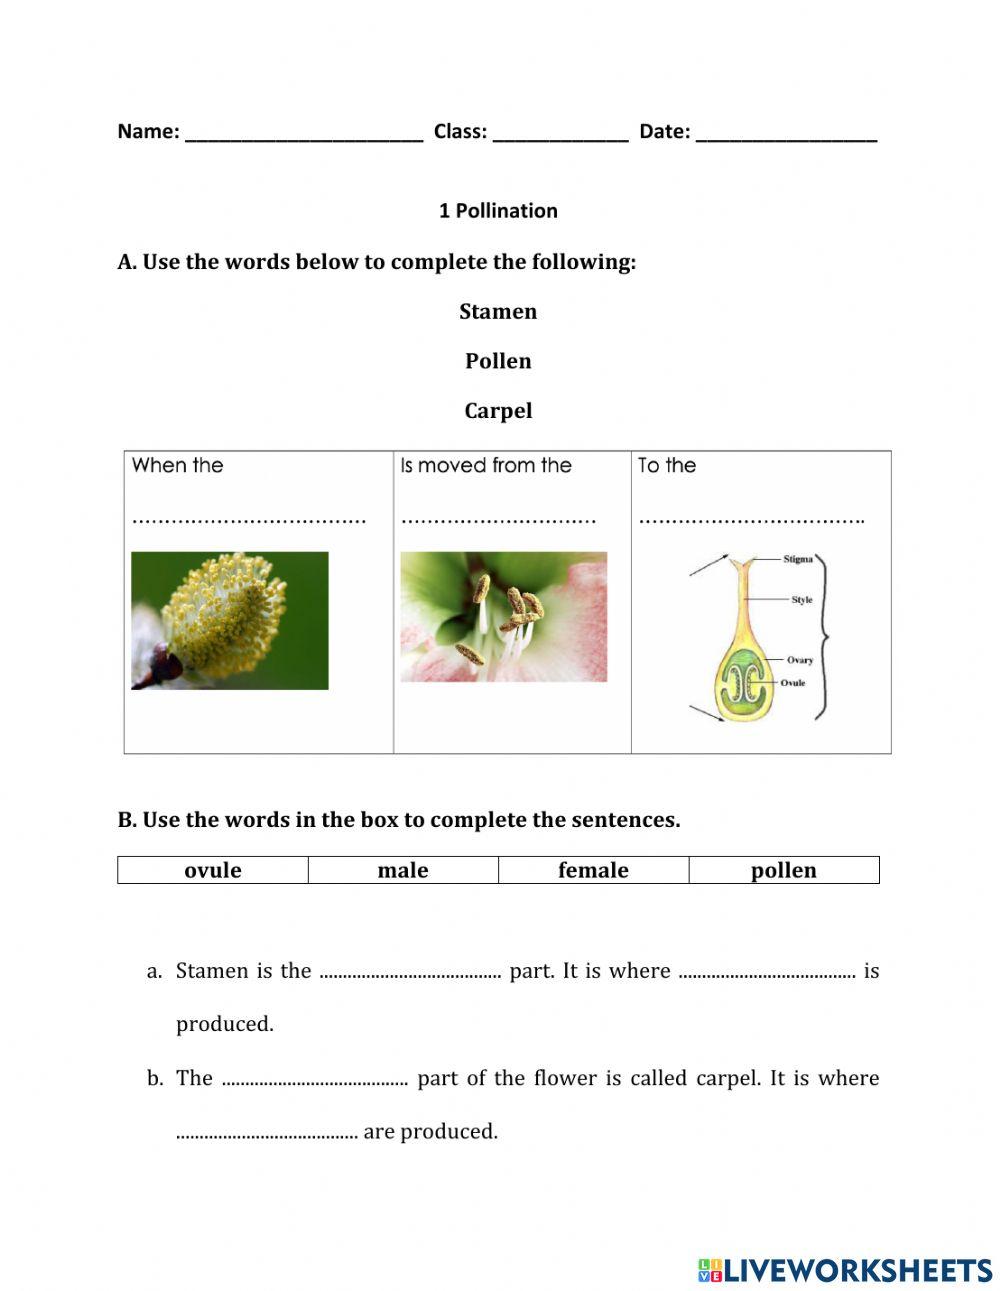 Pollination Worksheet Stage 5